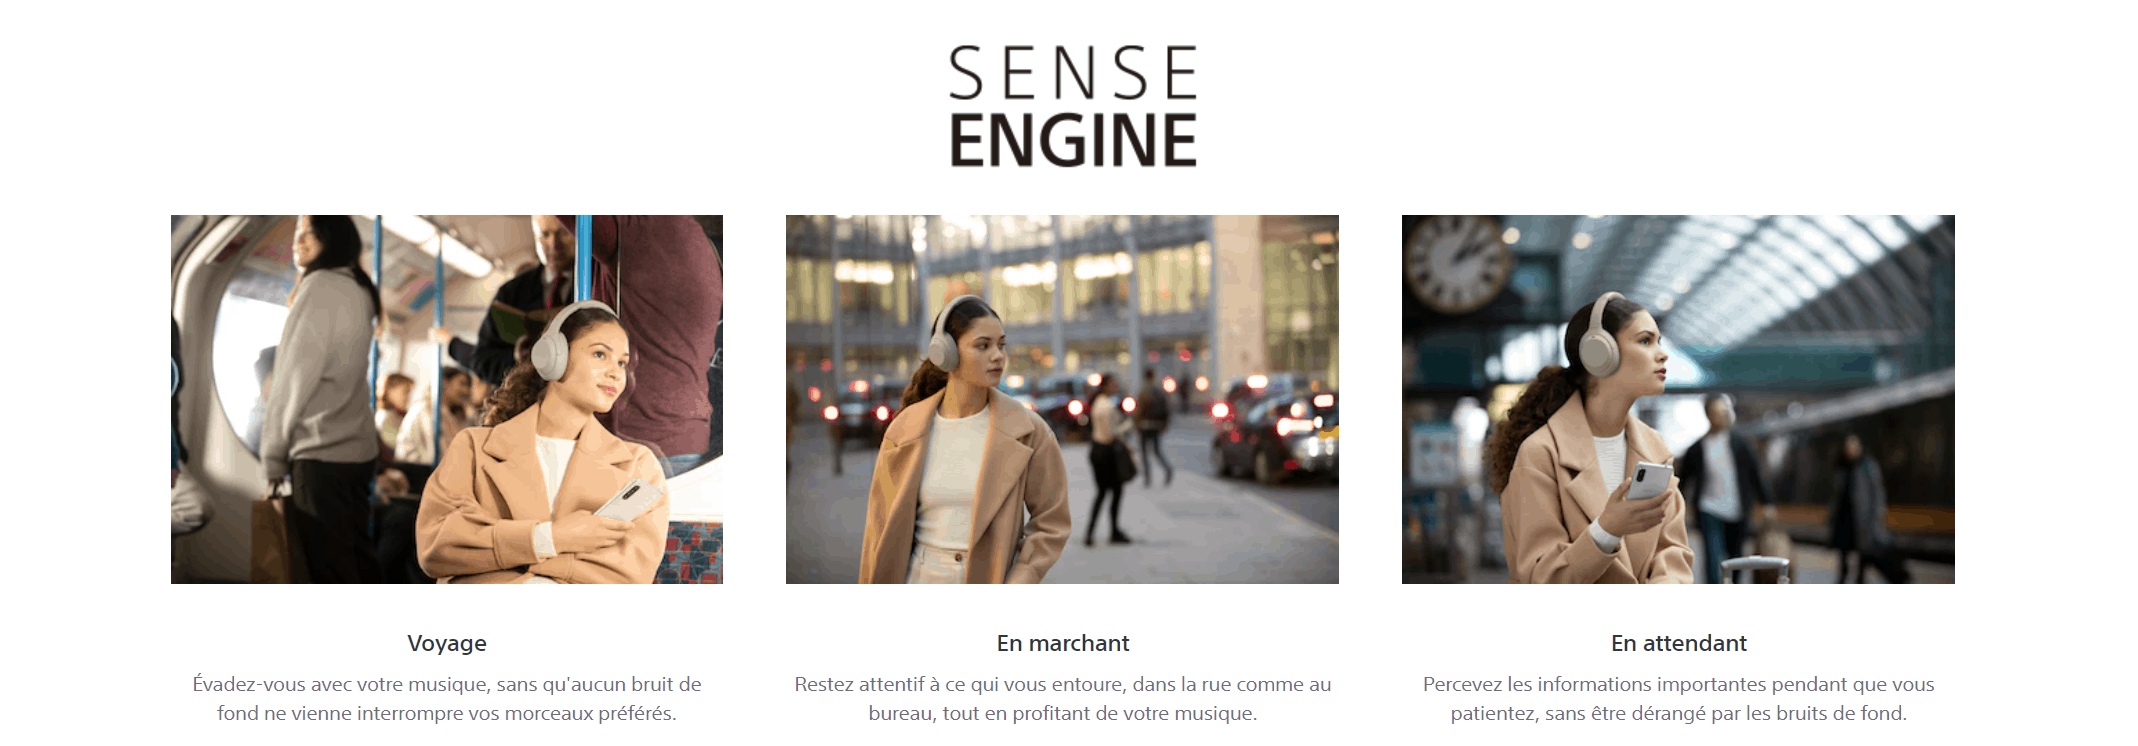 sense engine